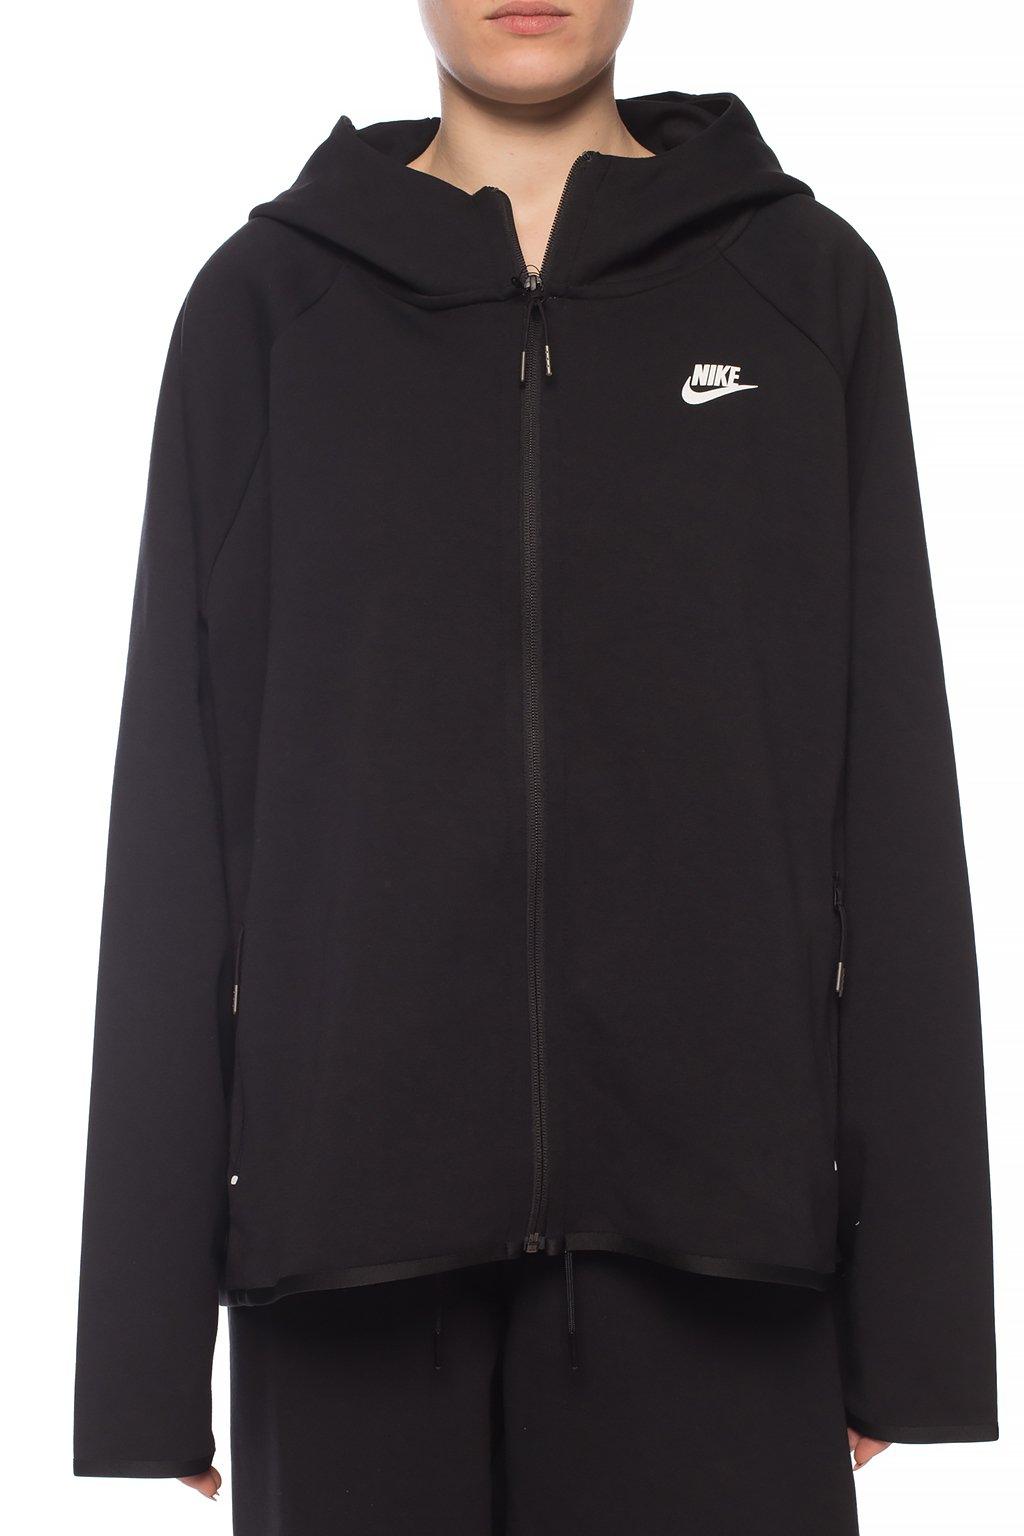 Nike Cotton Hooded Sweatshirt With Logo Black - Save 30% - Lyst